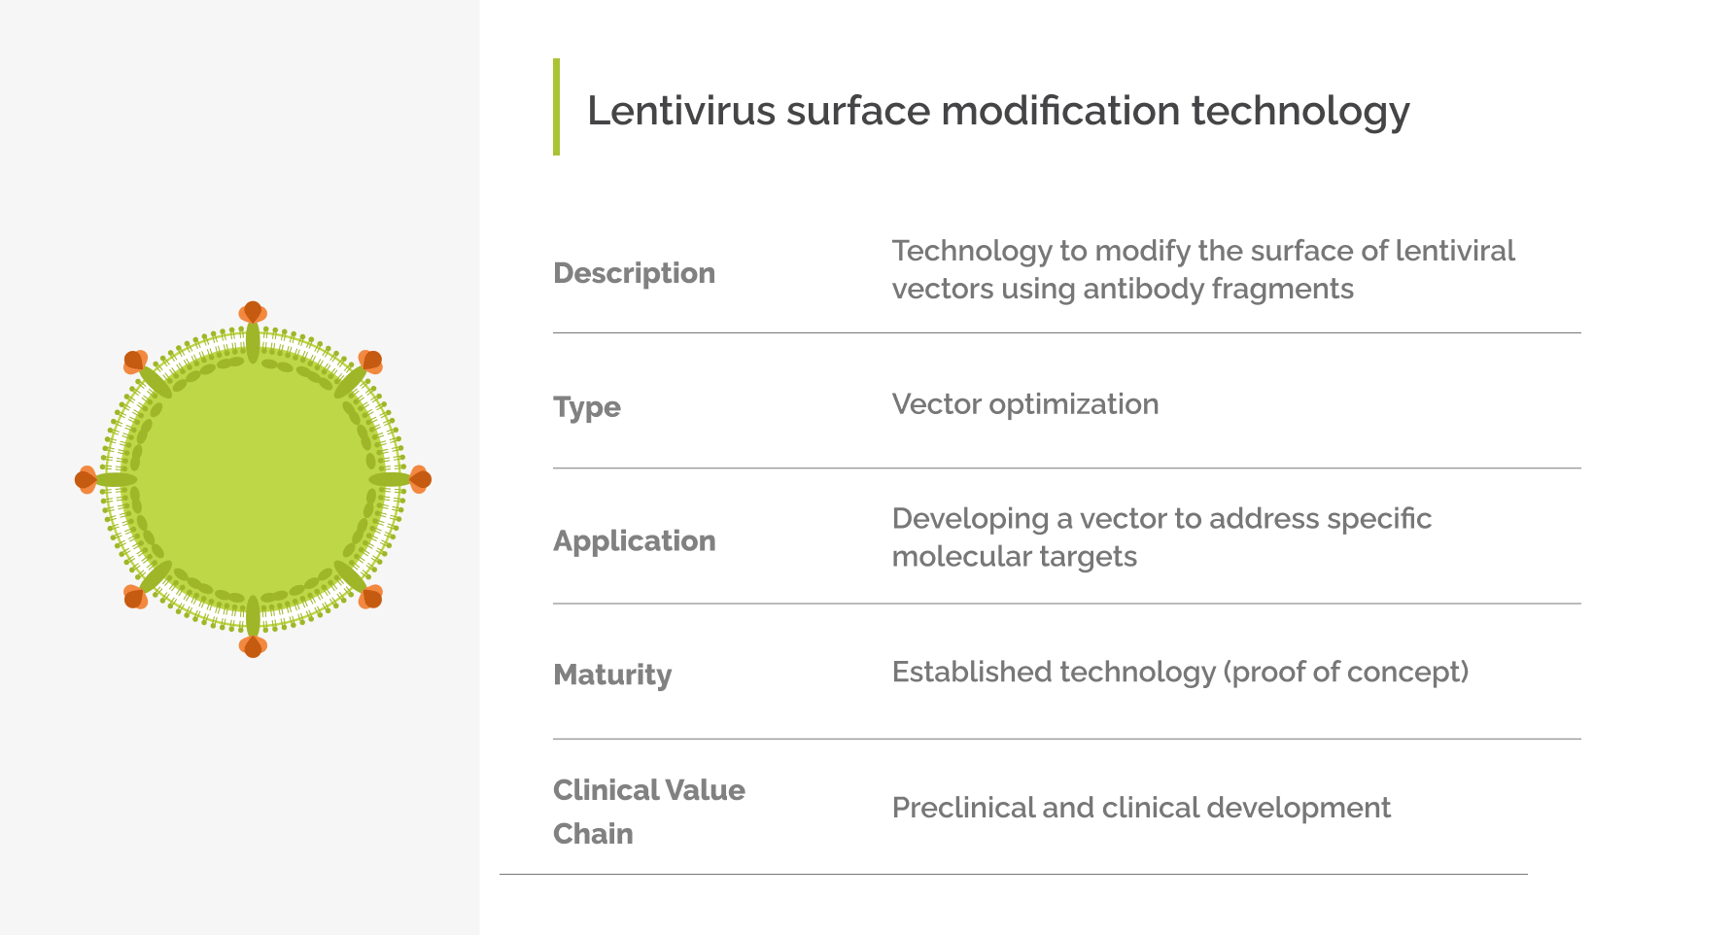 Lentivirus surface modification technology